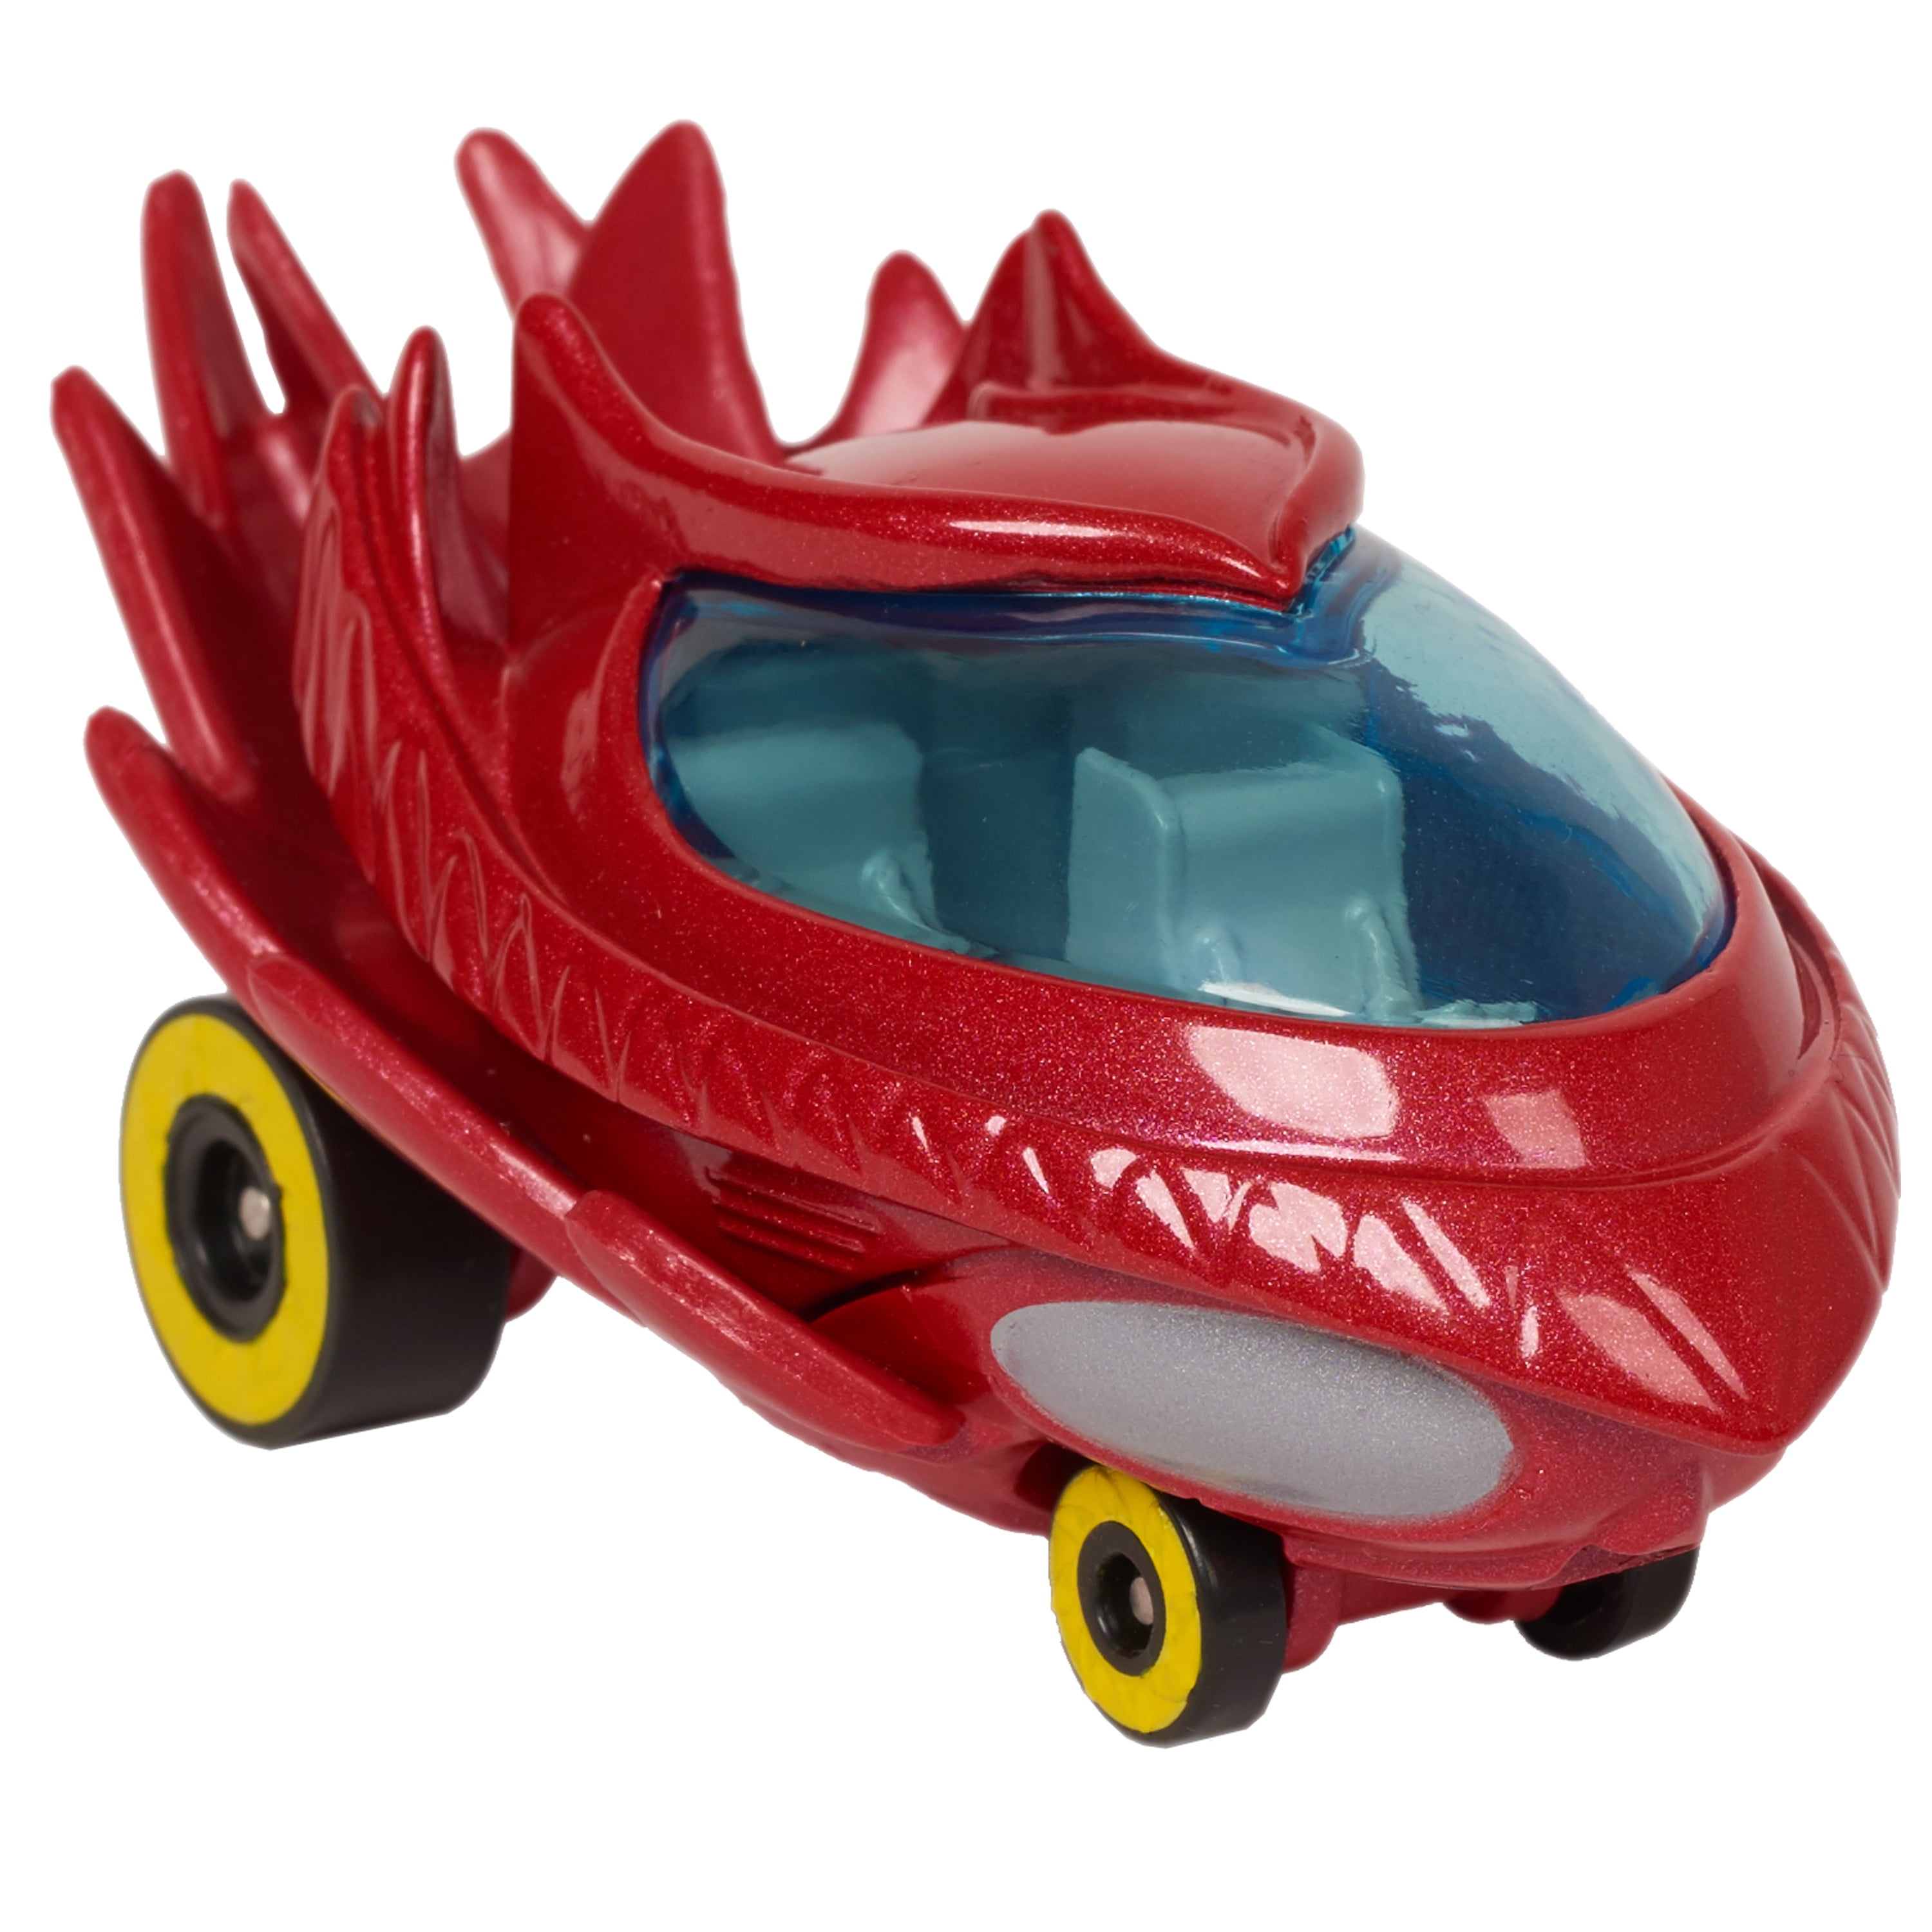 NEW PJ Masks OWL-GLIDER Die-Cast Car OWLETTE AMAYA 2017 Collectible Toy Vehicle